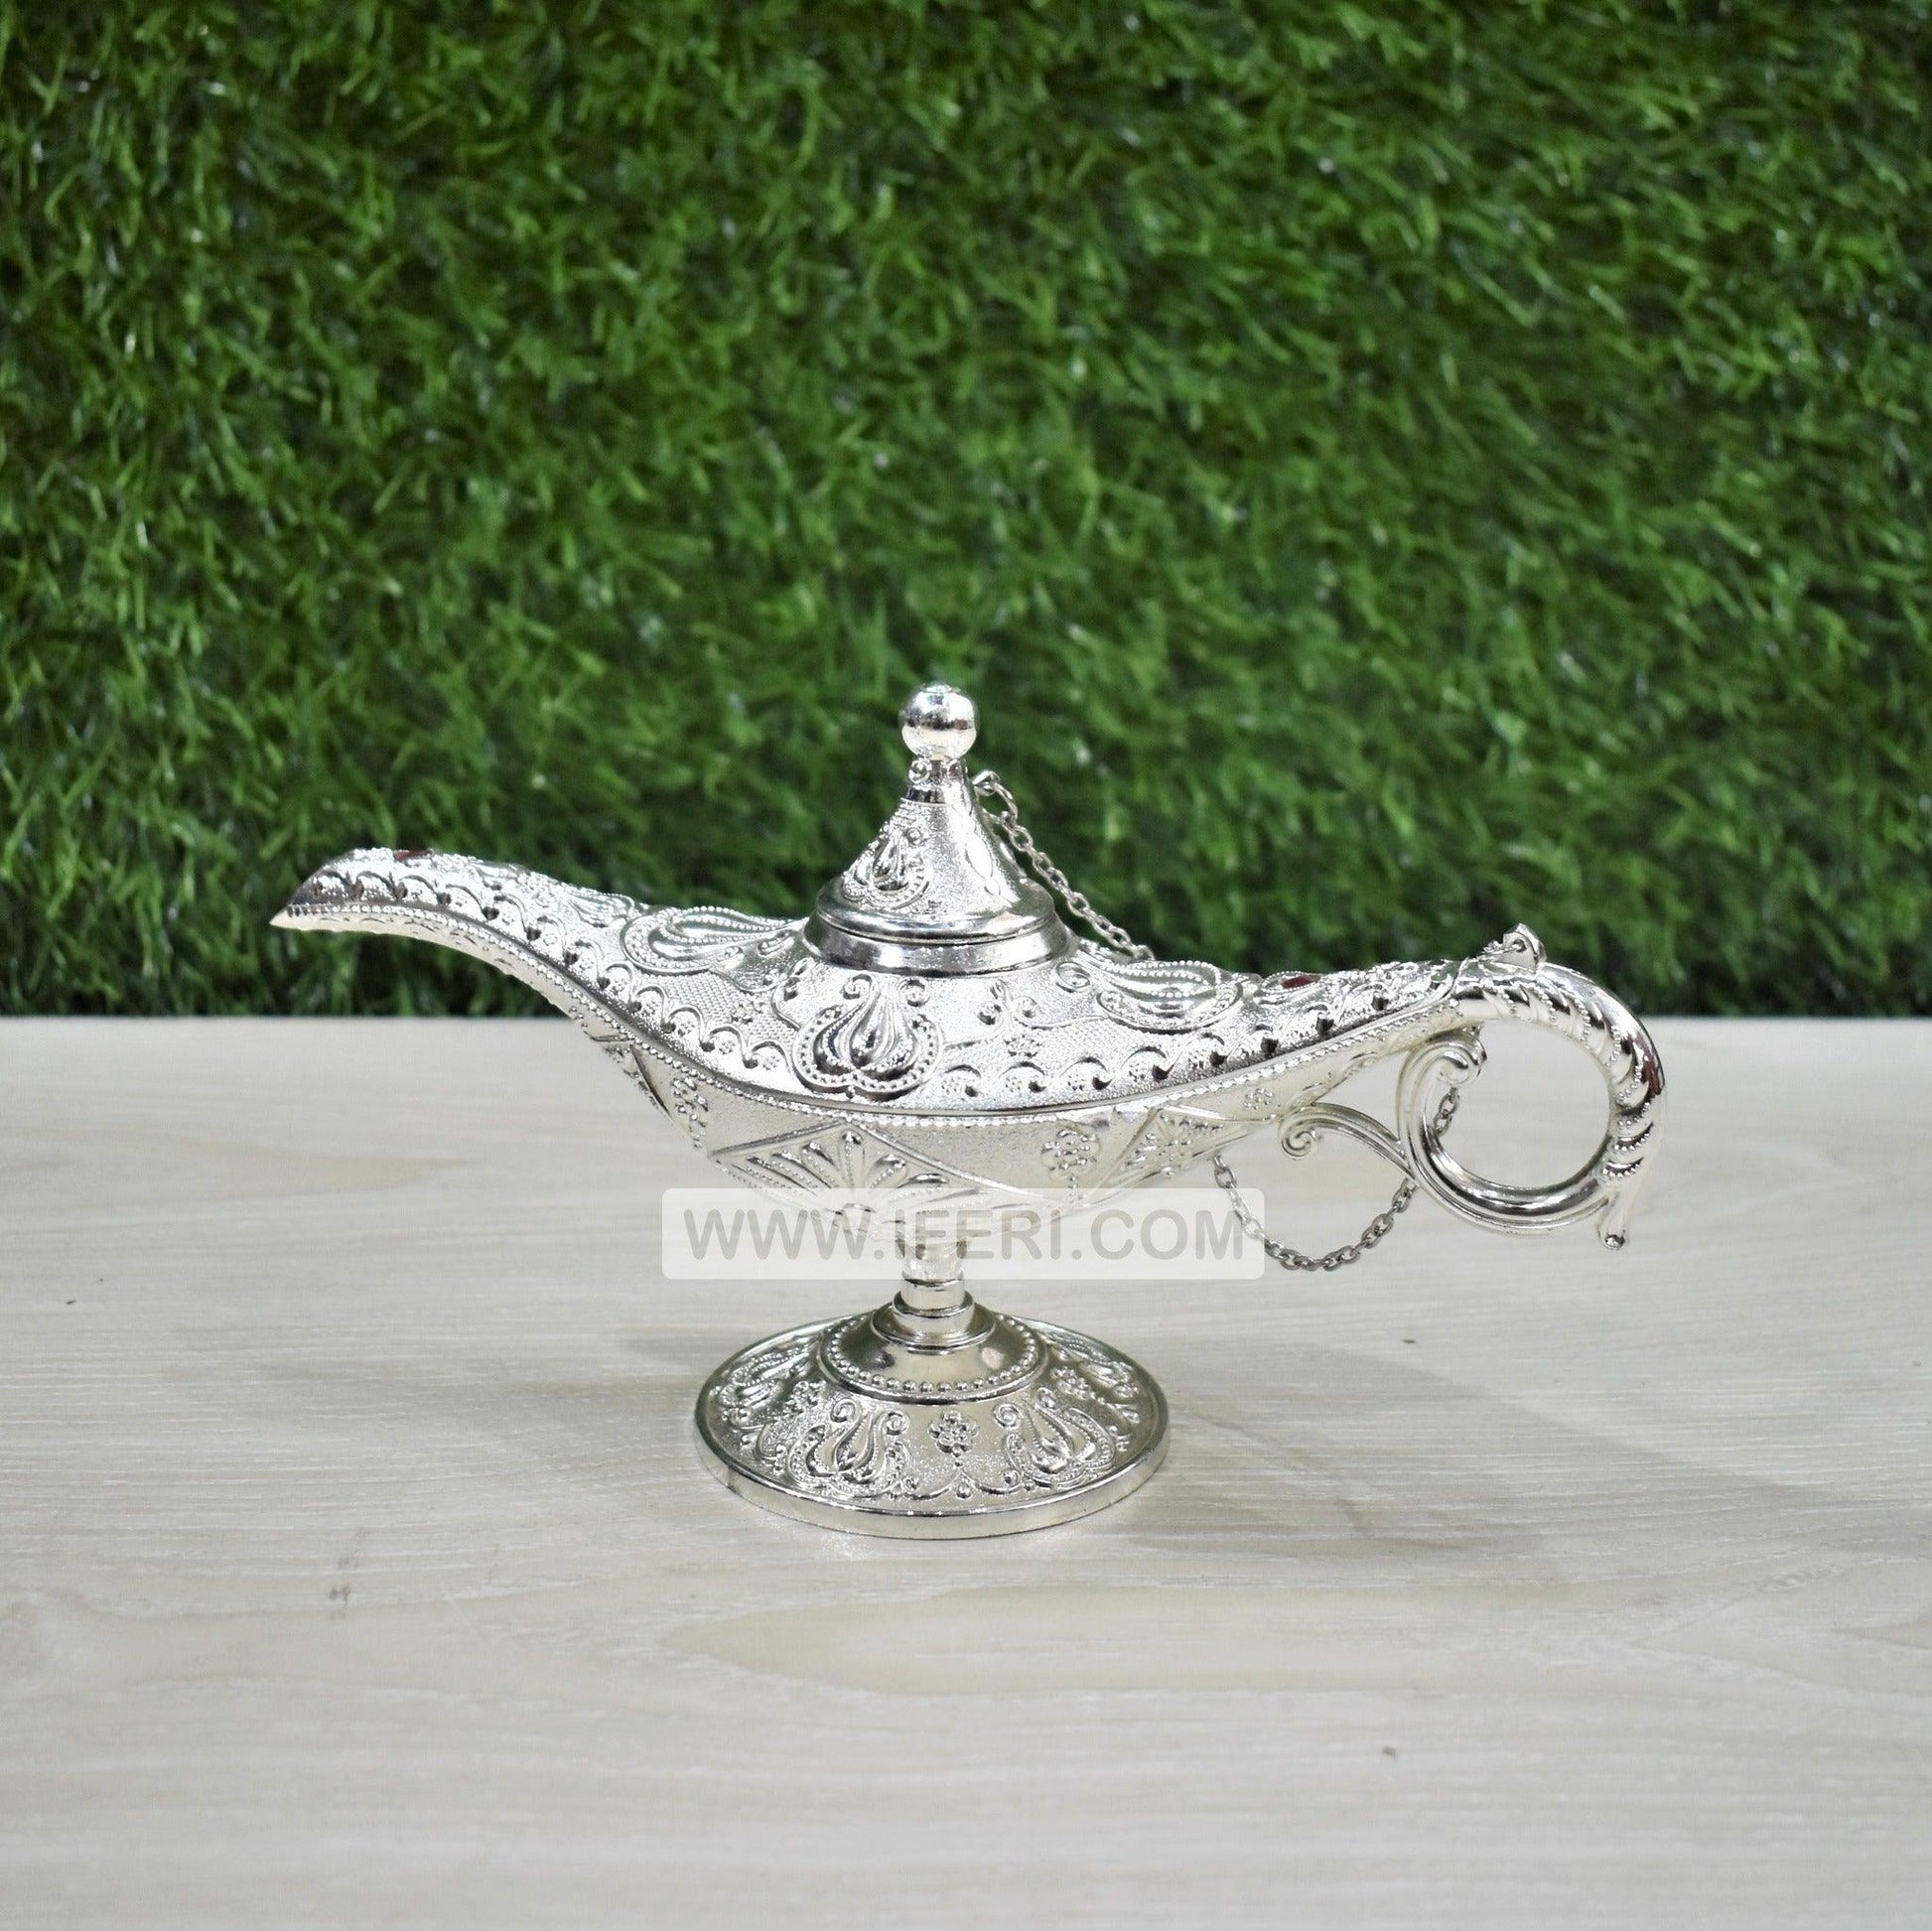 Metal Decorative Aladin Lamp RR6803 Price in Bangladesh - iferi.com